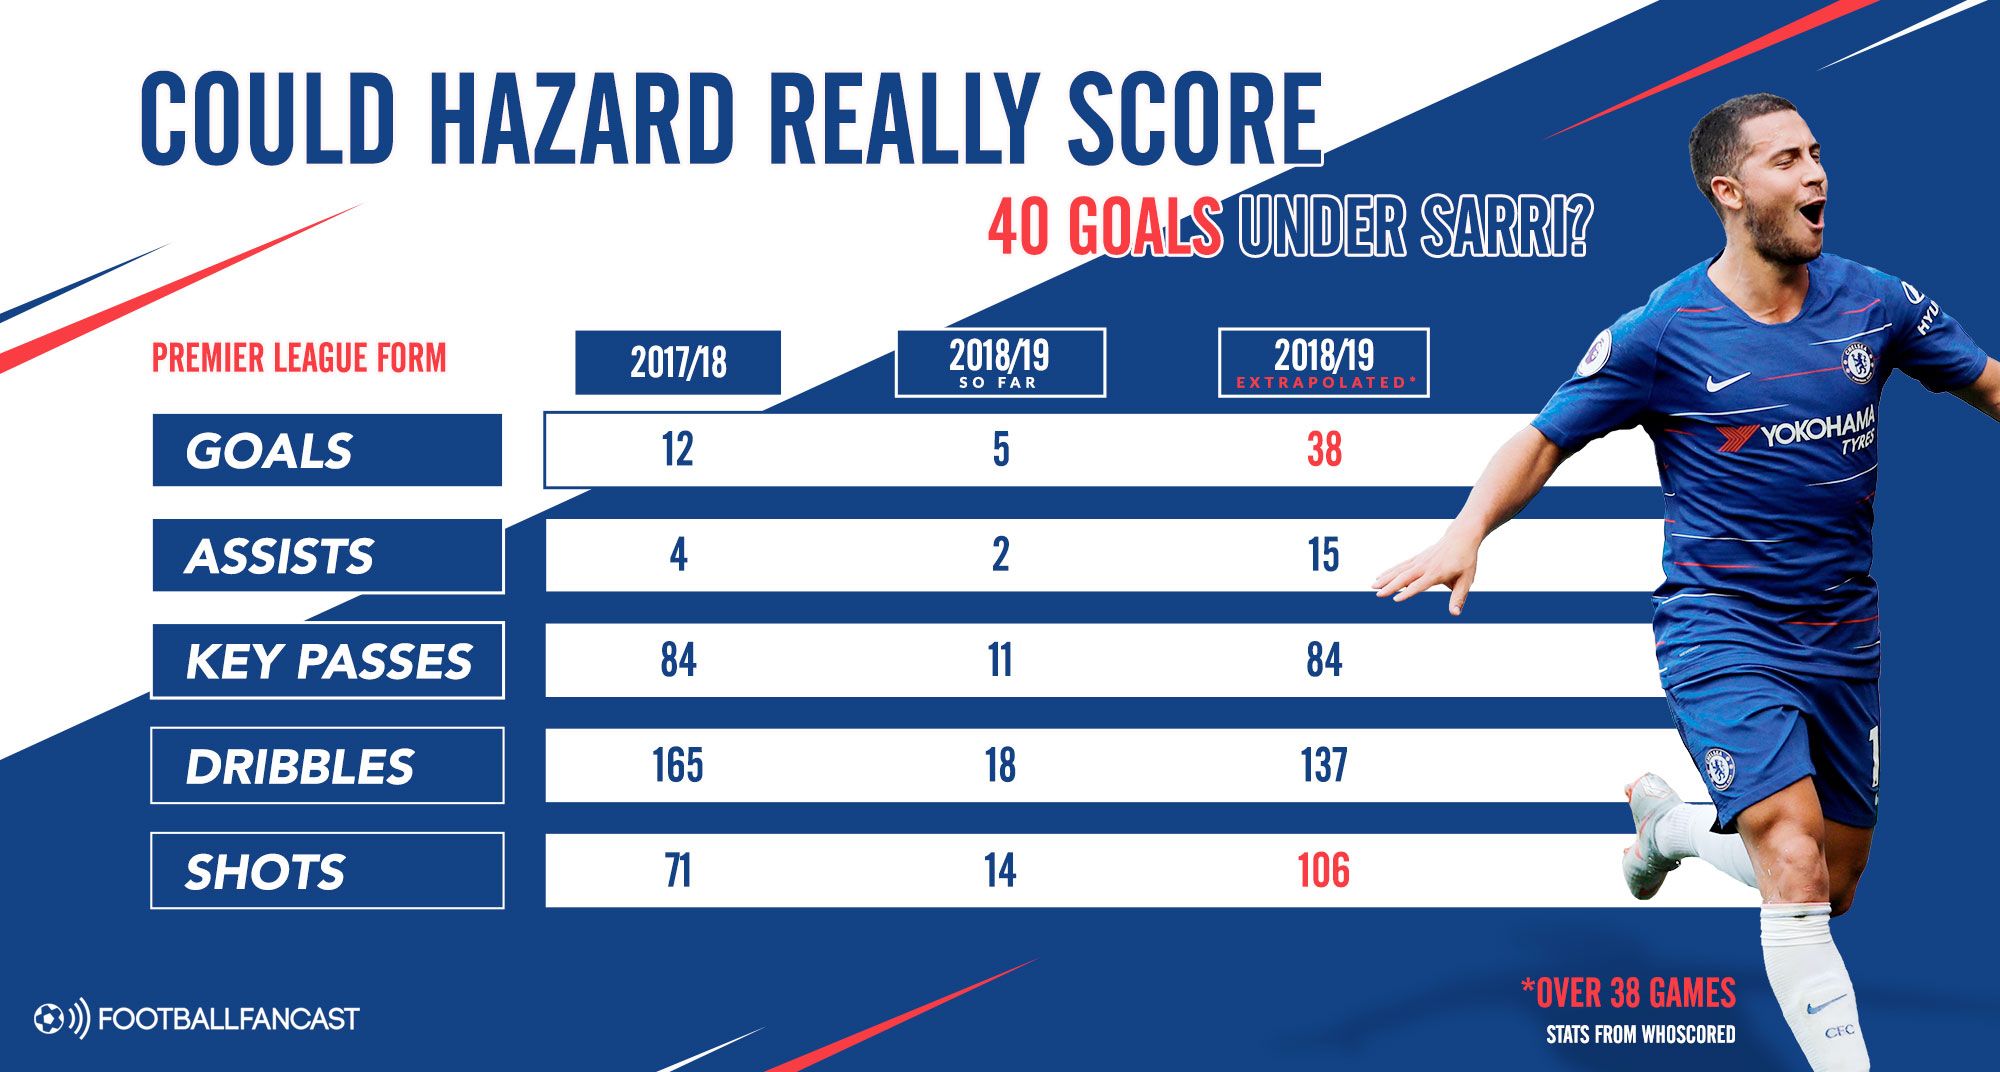 Could Eden Hazard really score 40 goals this season?